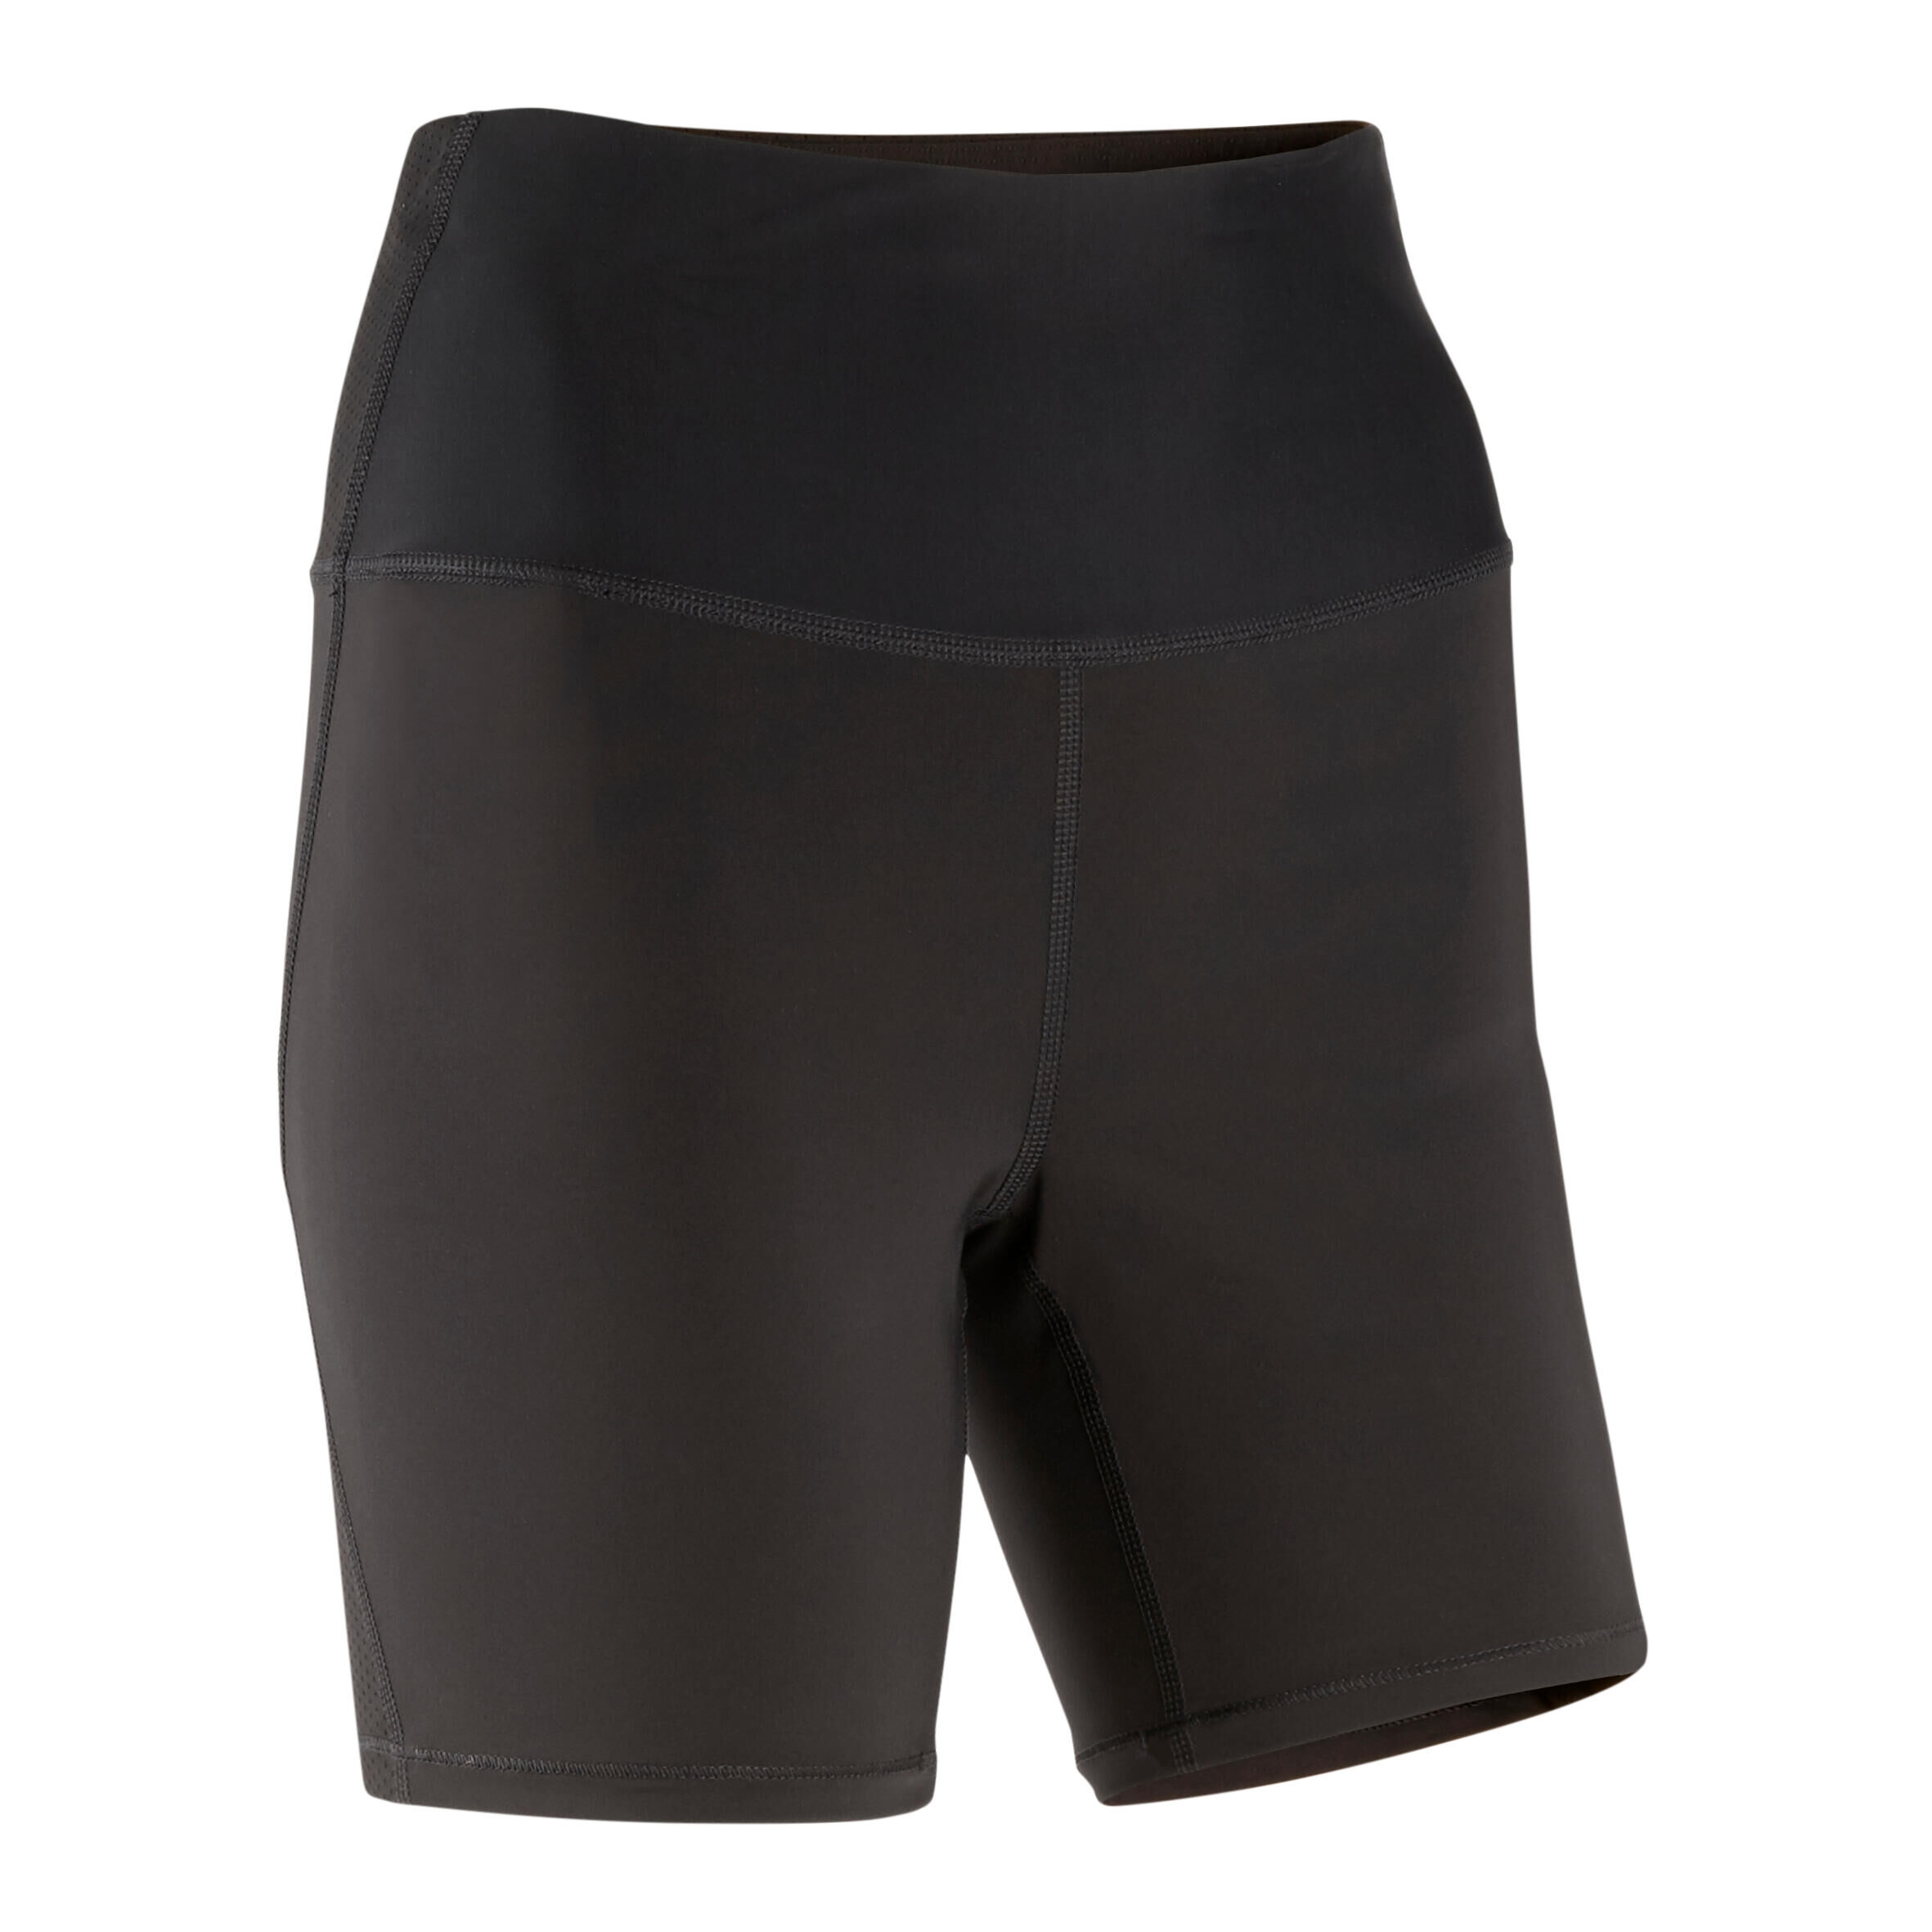 High-Waisted Black Cotton Spandex Booty Shorts XS S M L XL 2XL 3XL plus  size stretch hot pants short high rise underwear undies matte